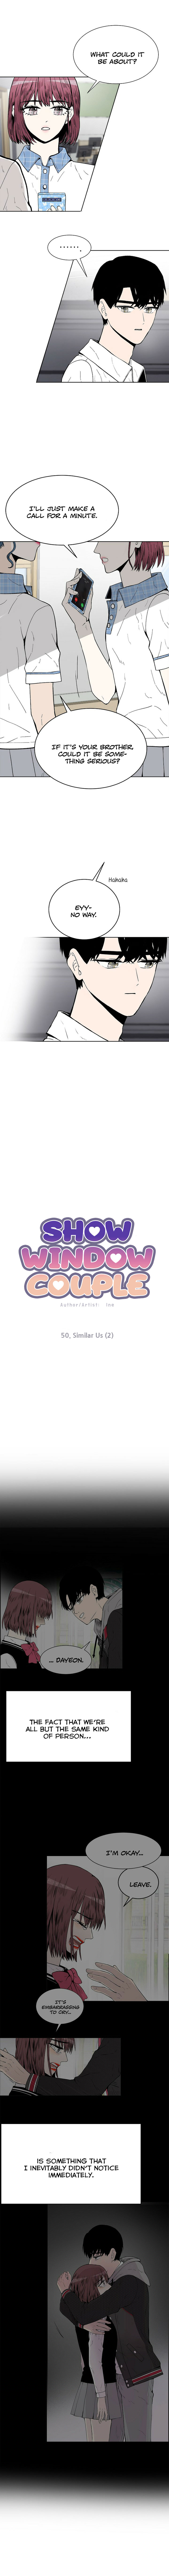 Show Window Couple - Page 2